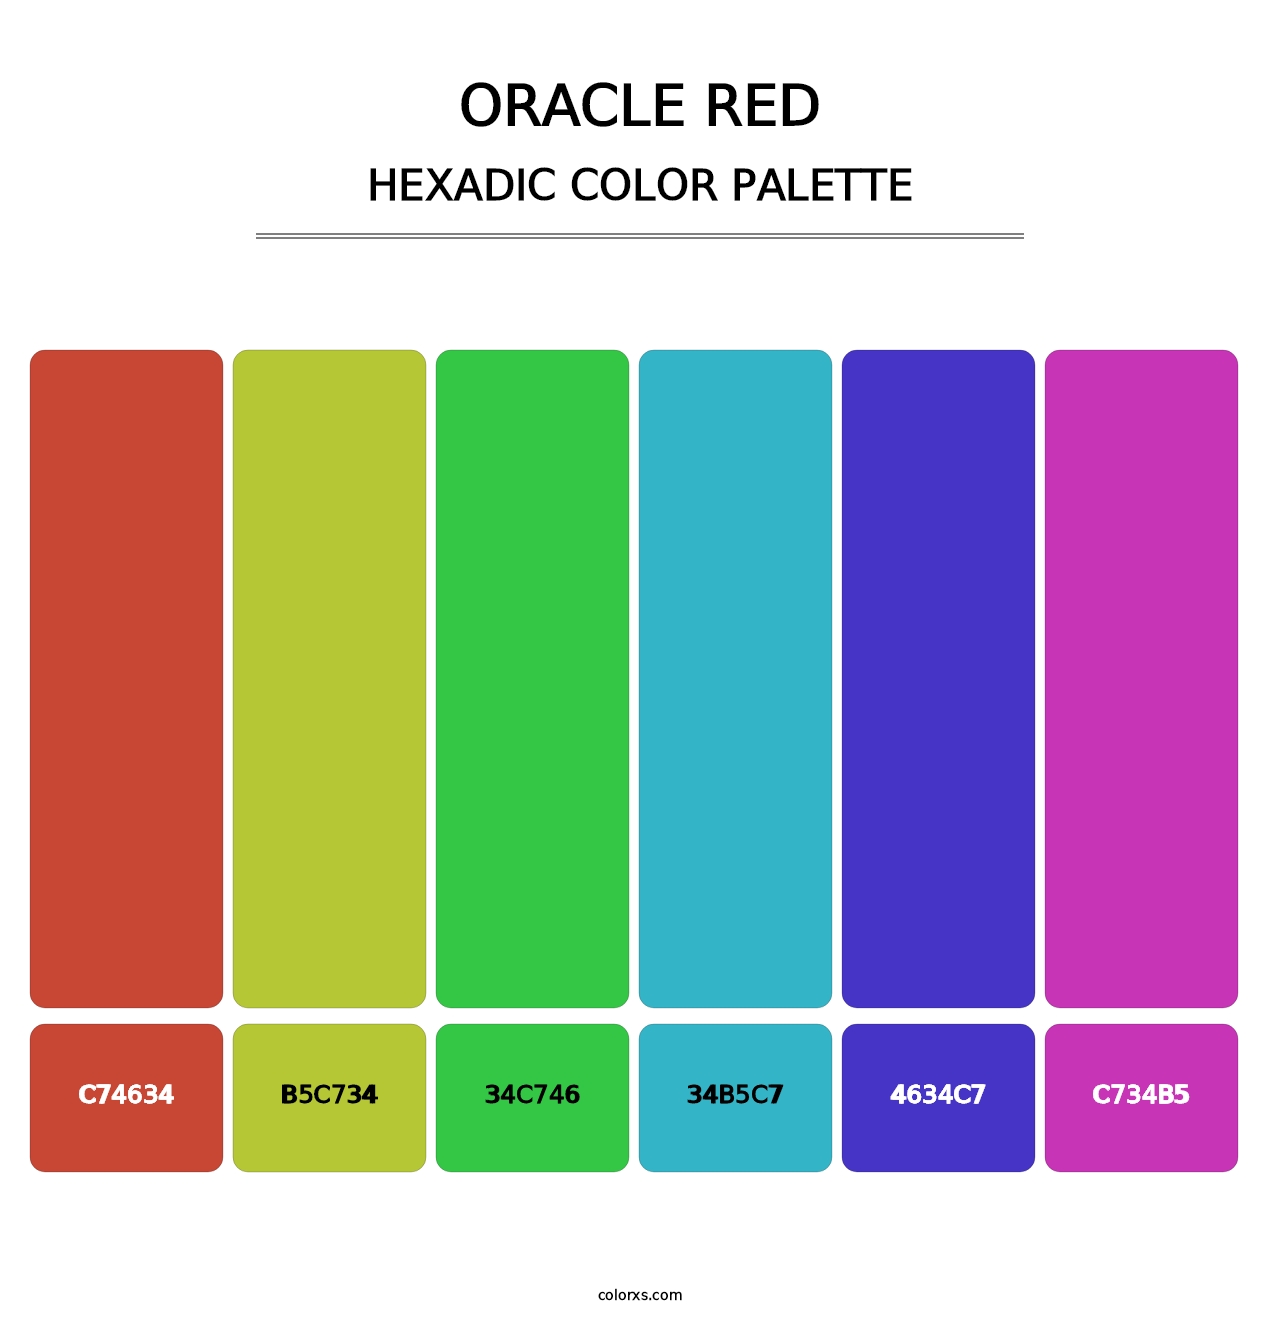 Oracle Red - Hexadic Color Palette